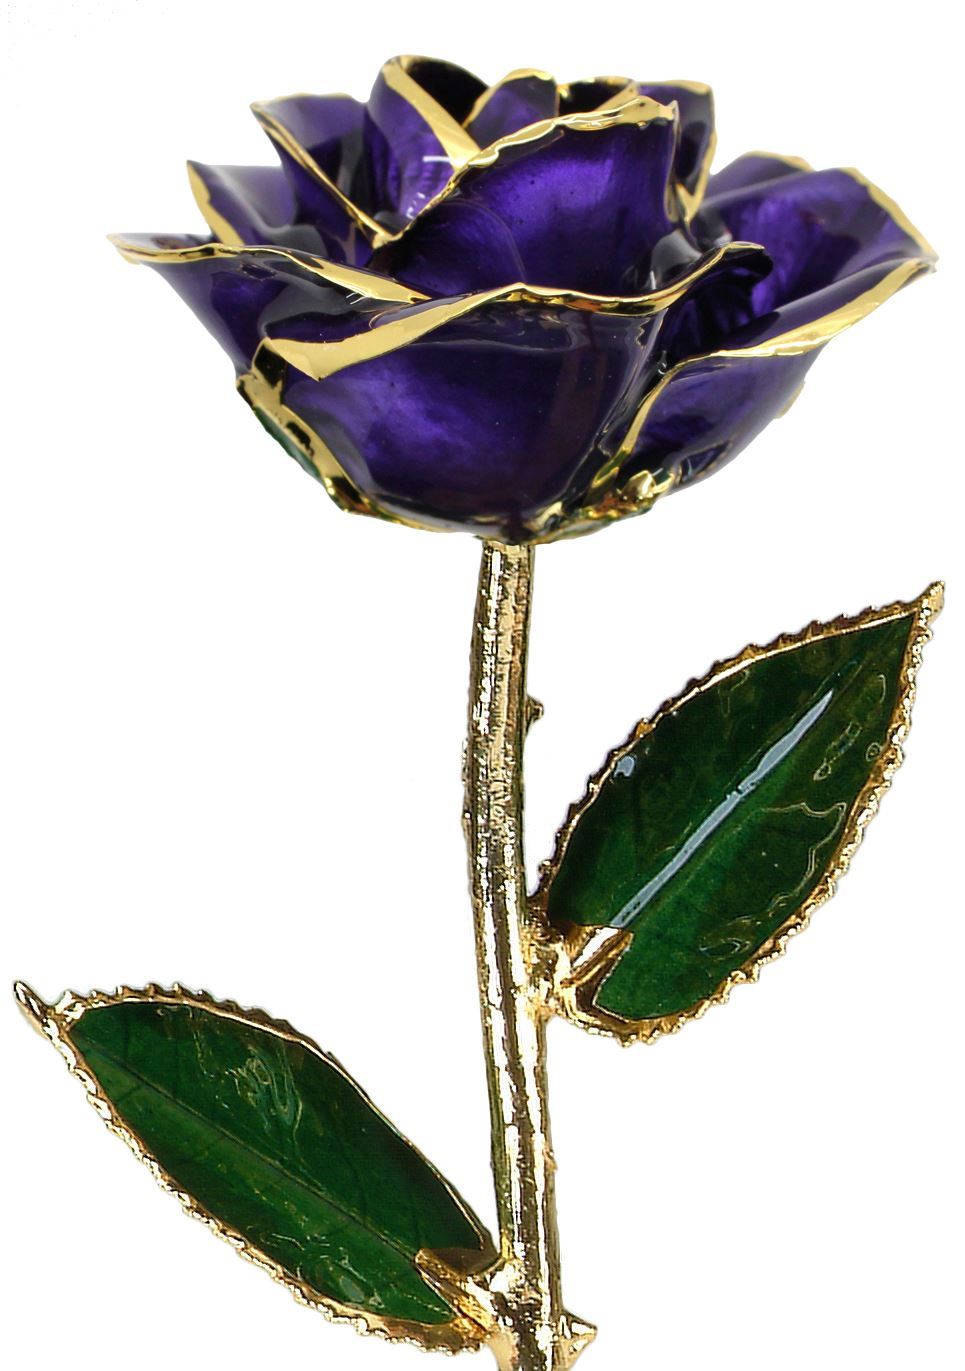 https://www.arthursjewelers.com/content/images/thumbs/Original/lilac-rose_1-19361790.jpeg